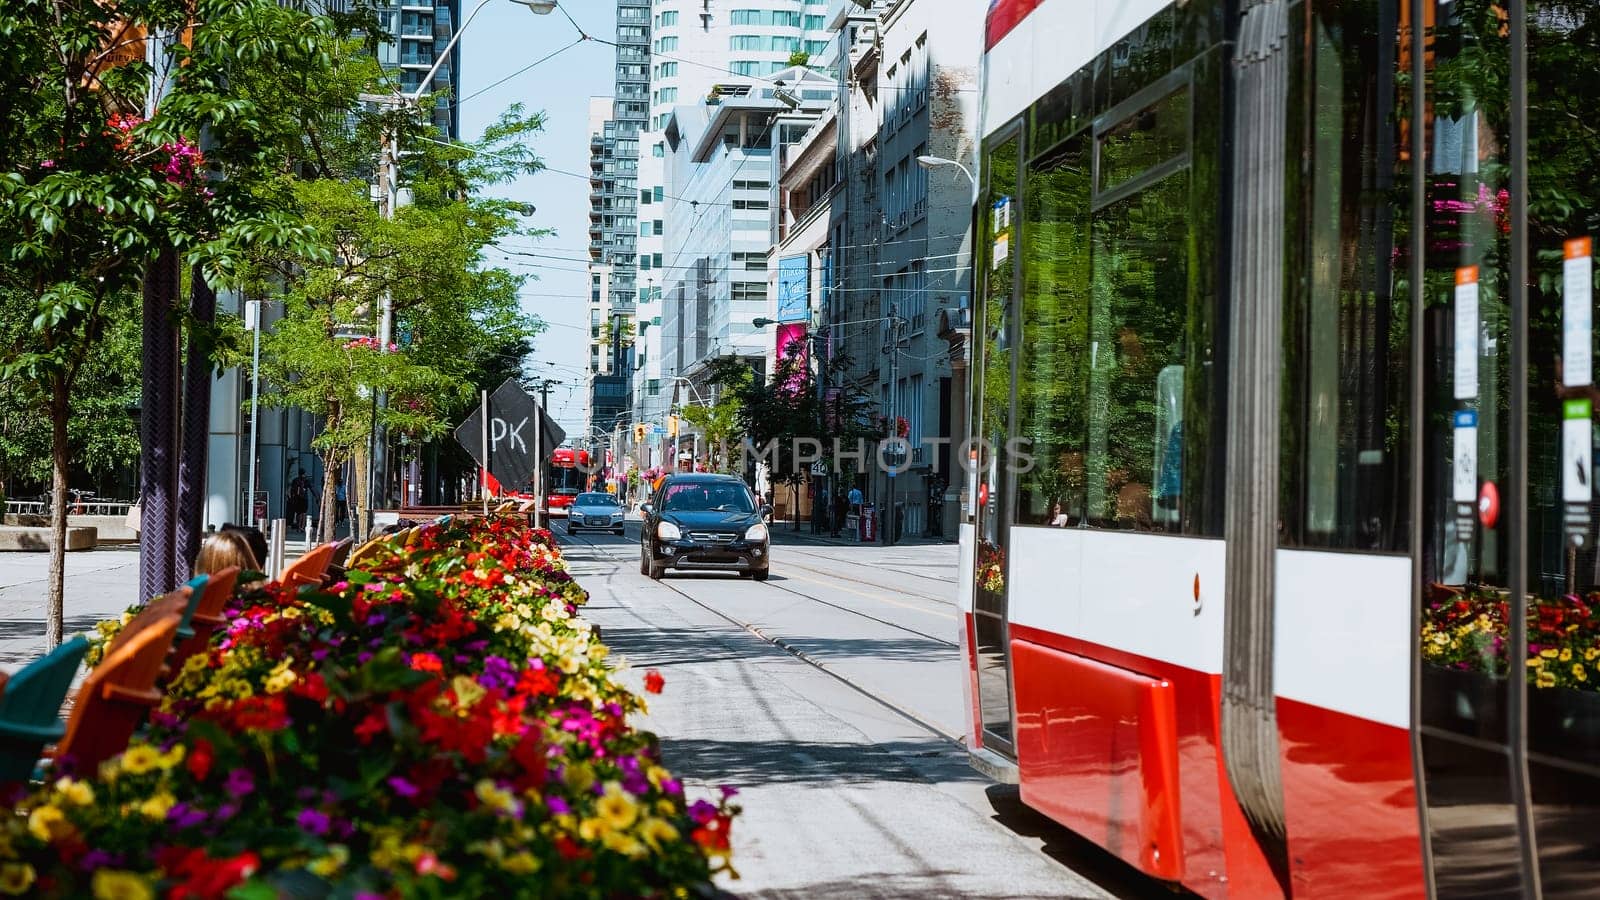 Street view of new Bombardier-made TTC streetcar on King street in Toronto. New Toronto Transit Commission tram on streets of Toronto. Toronto, Canada - 04 09 2022 by JuliaDorian